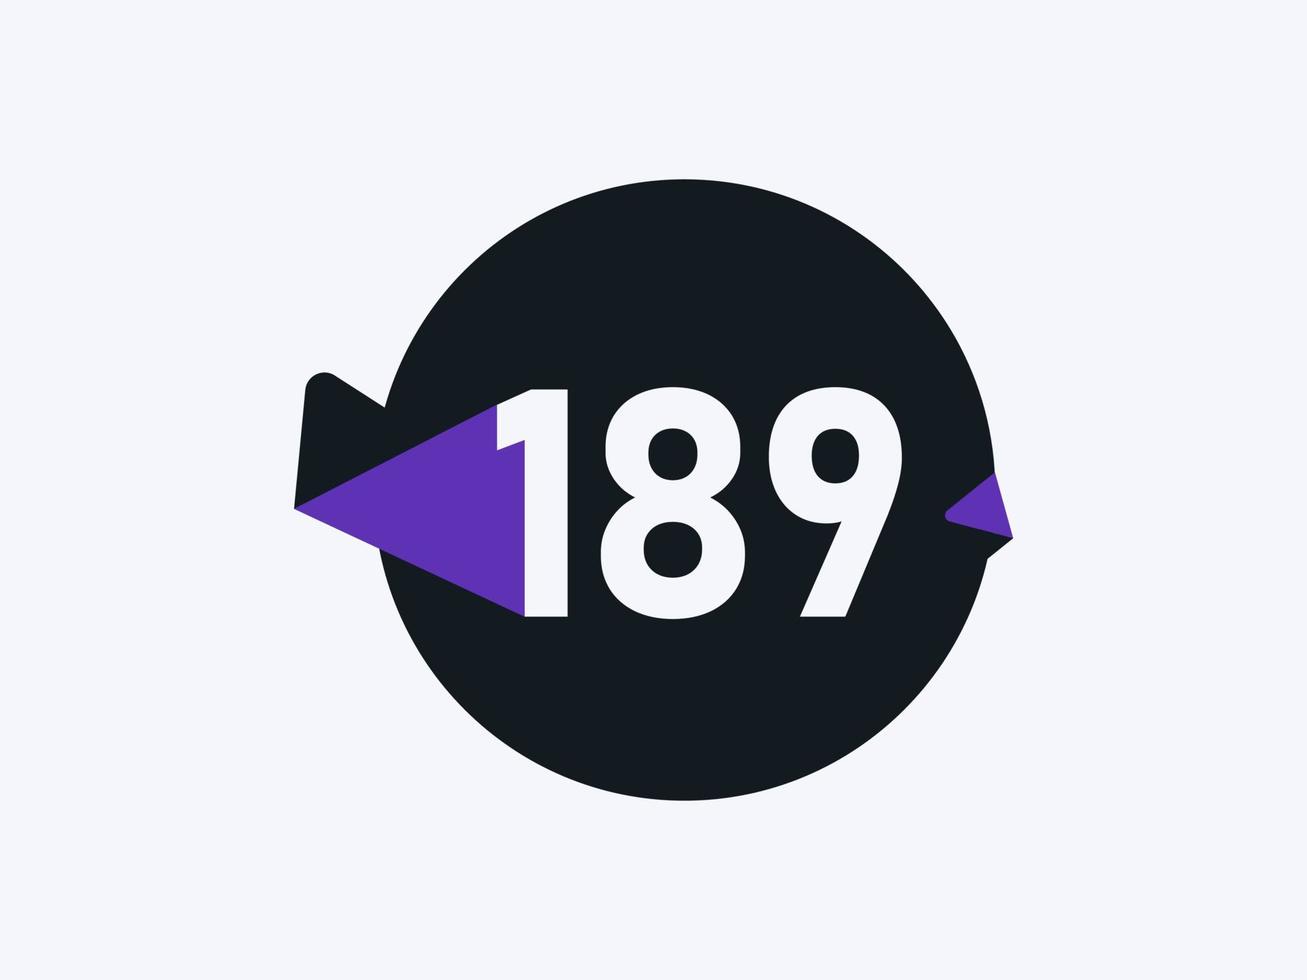 189 Number logo icon design vector image. Number logo icon design vector image